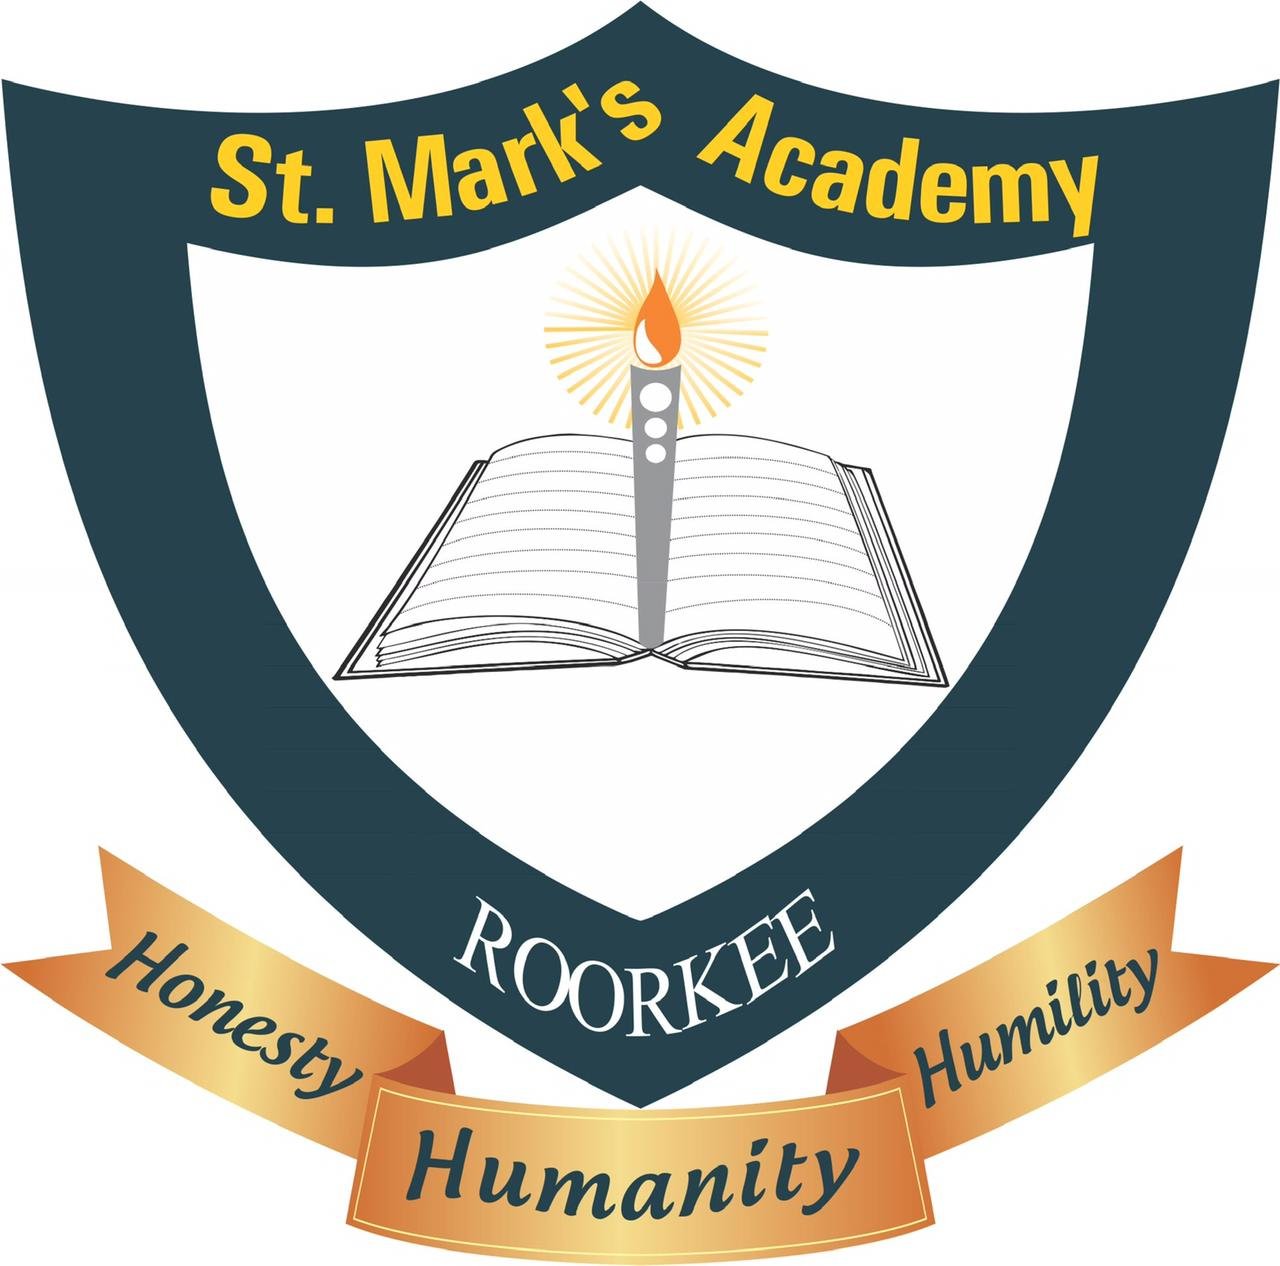 St. Marks Academy, Roorkee